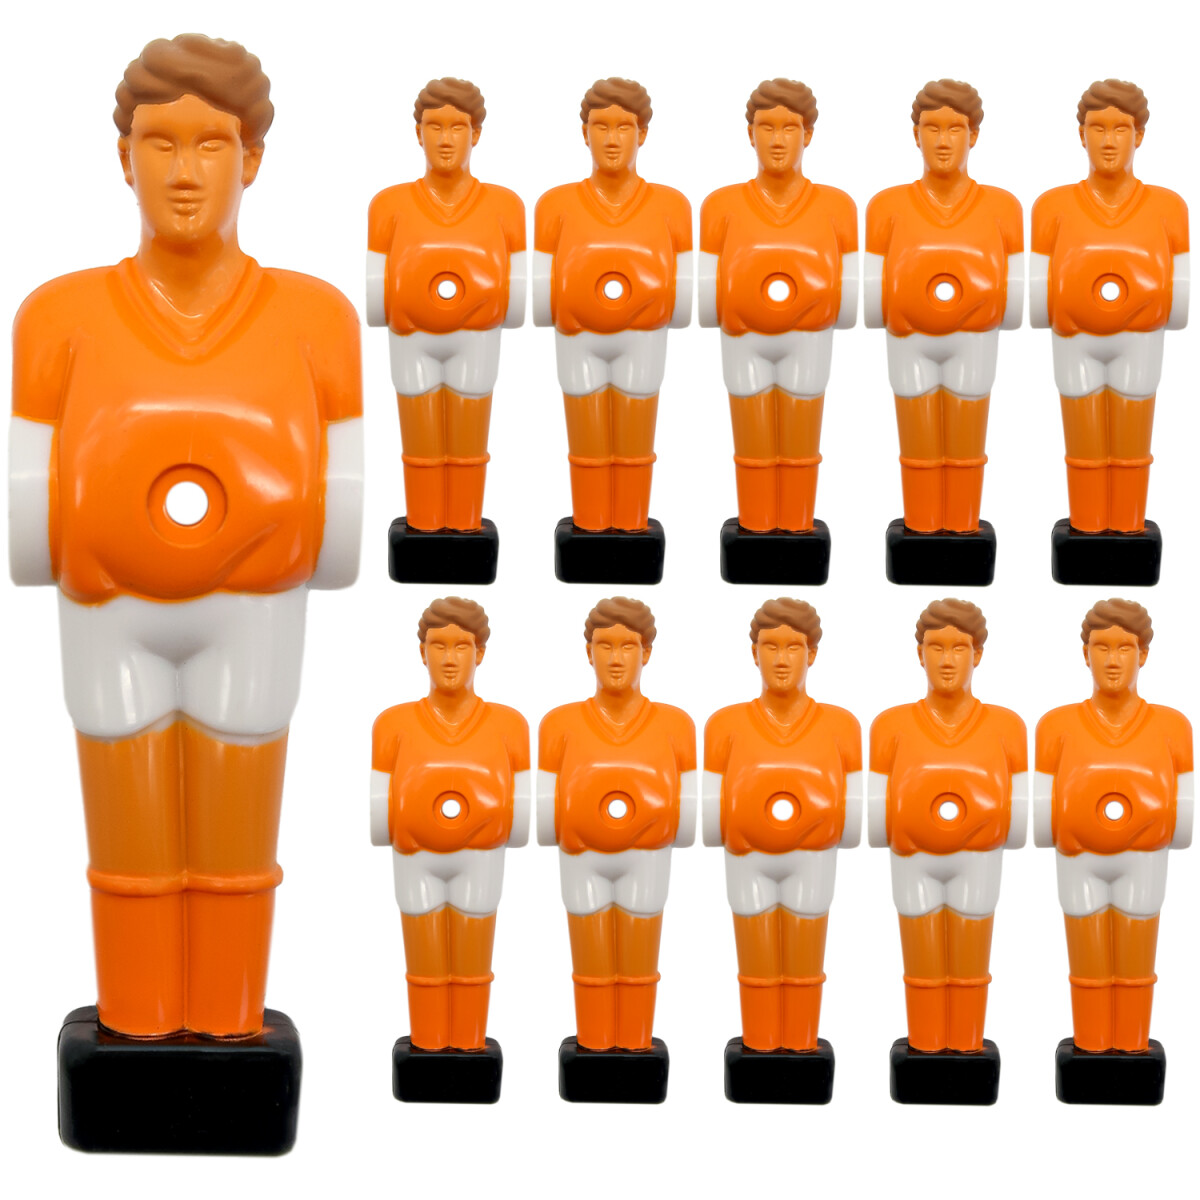 11 Tischkicker Figuren 13mm Niederlande Orange - Tisch...